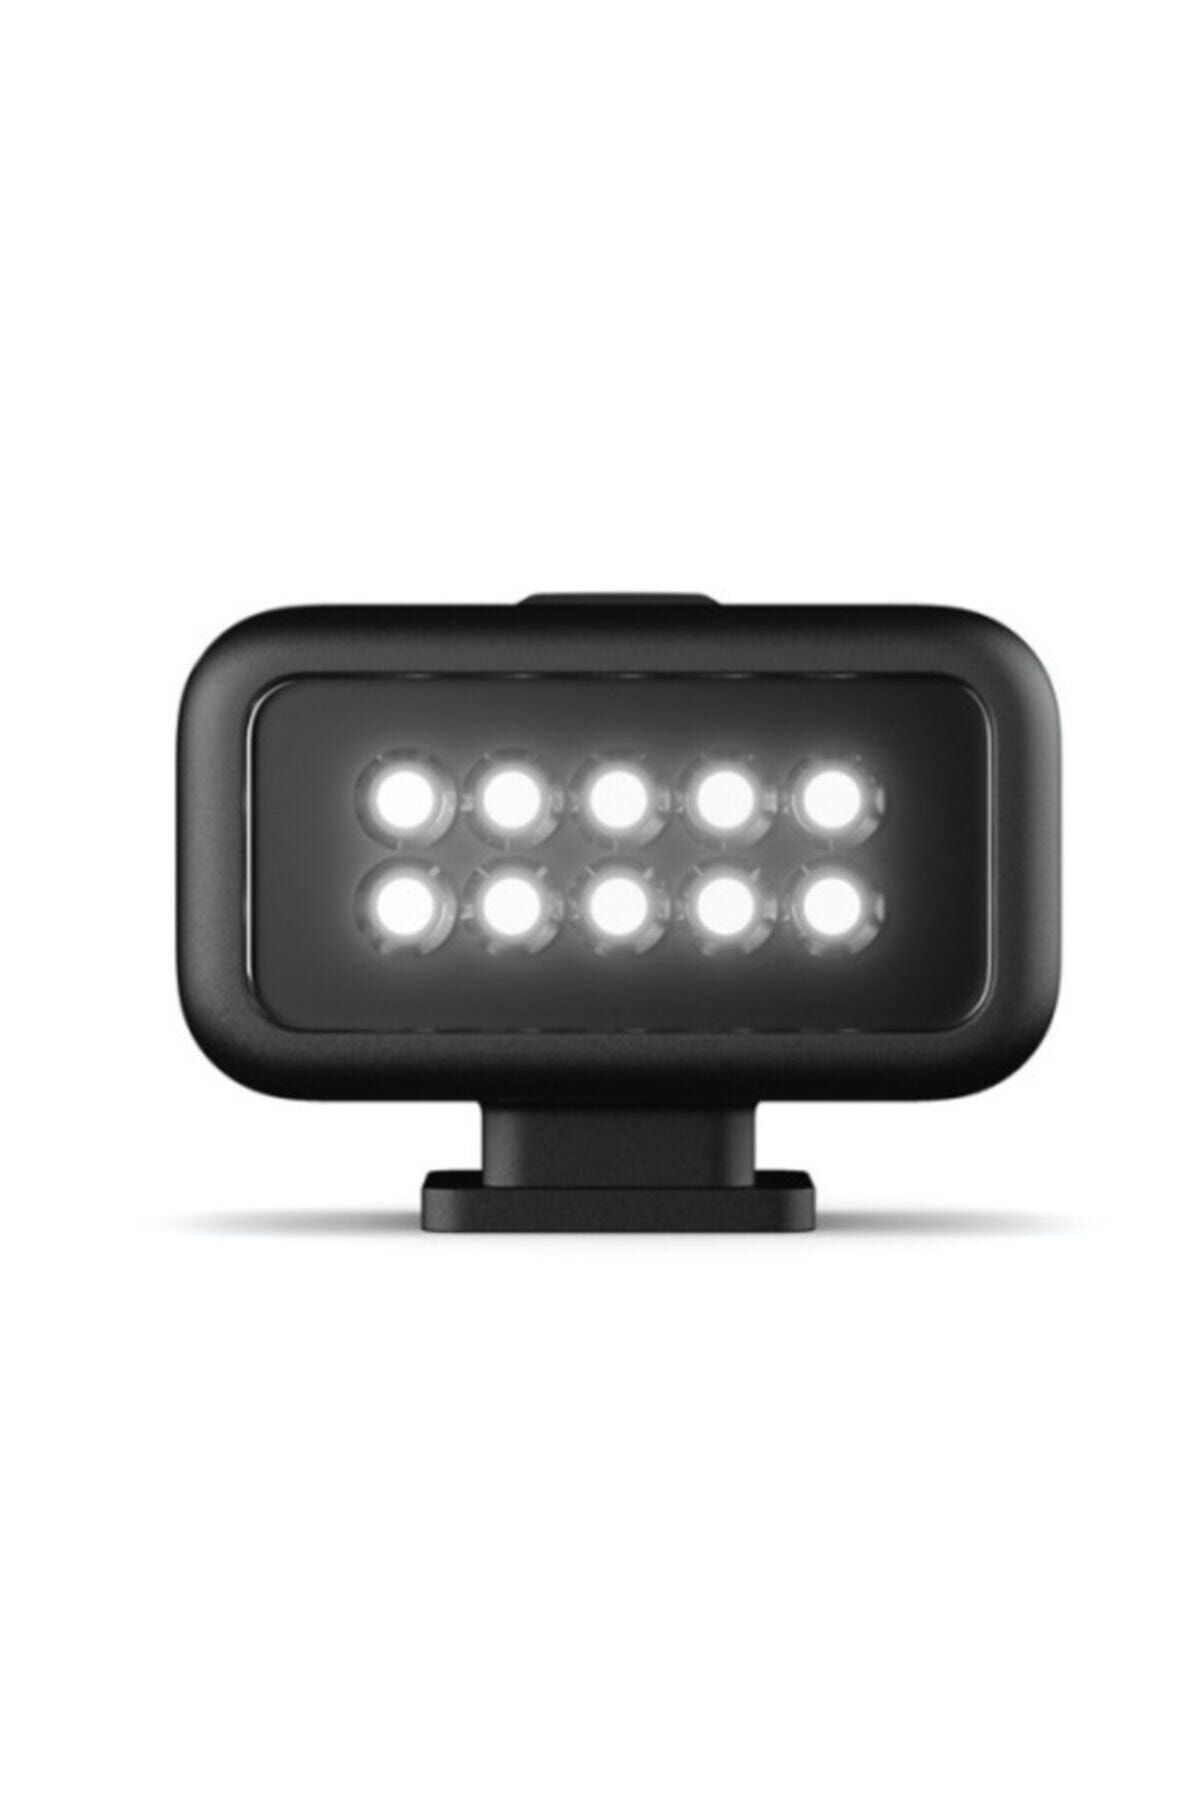 GoPro Light Mod (Hero 8 Black)